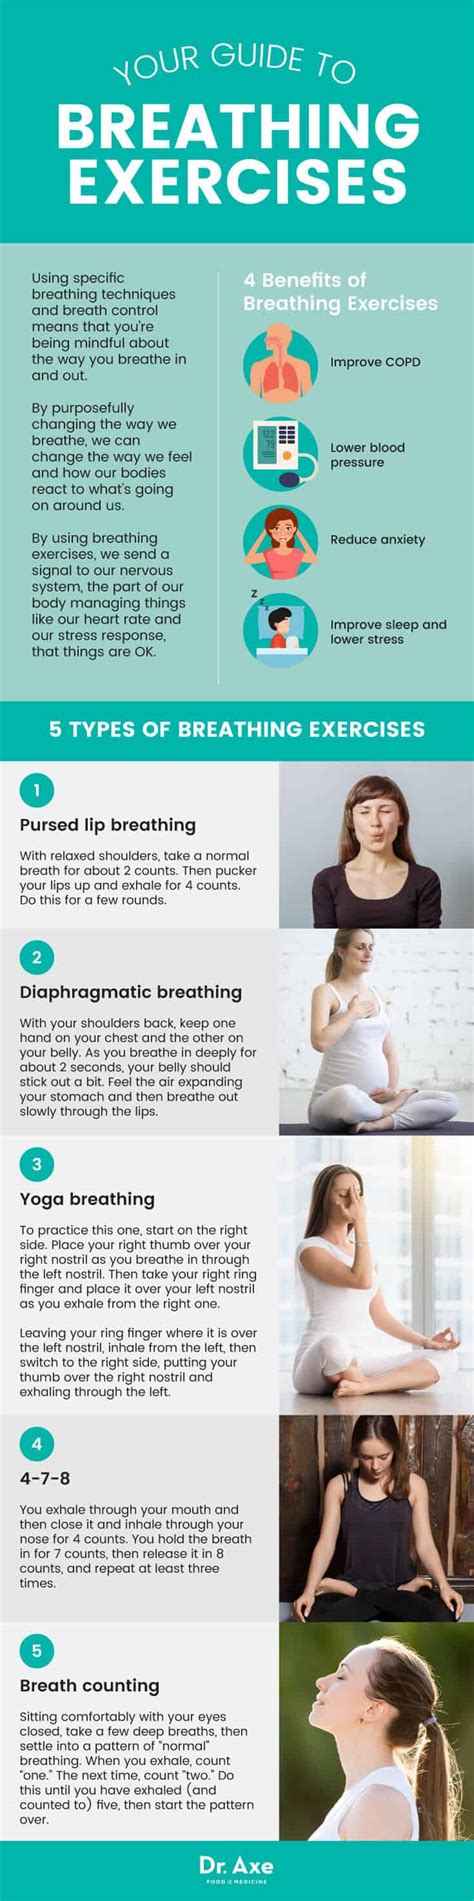 Breathing Exercises To Reduce Stress Improve Sleep Dr Axe